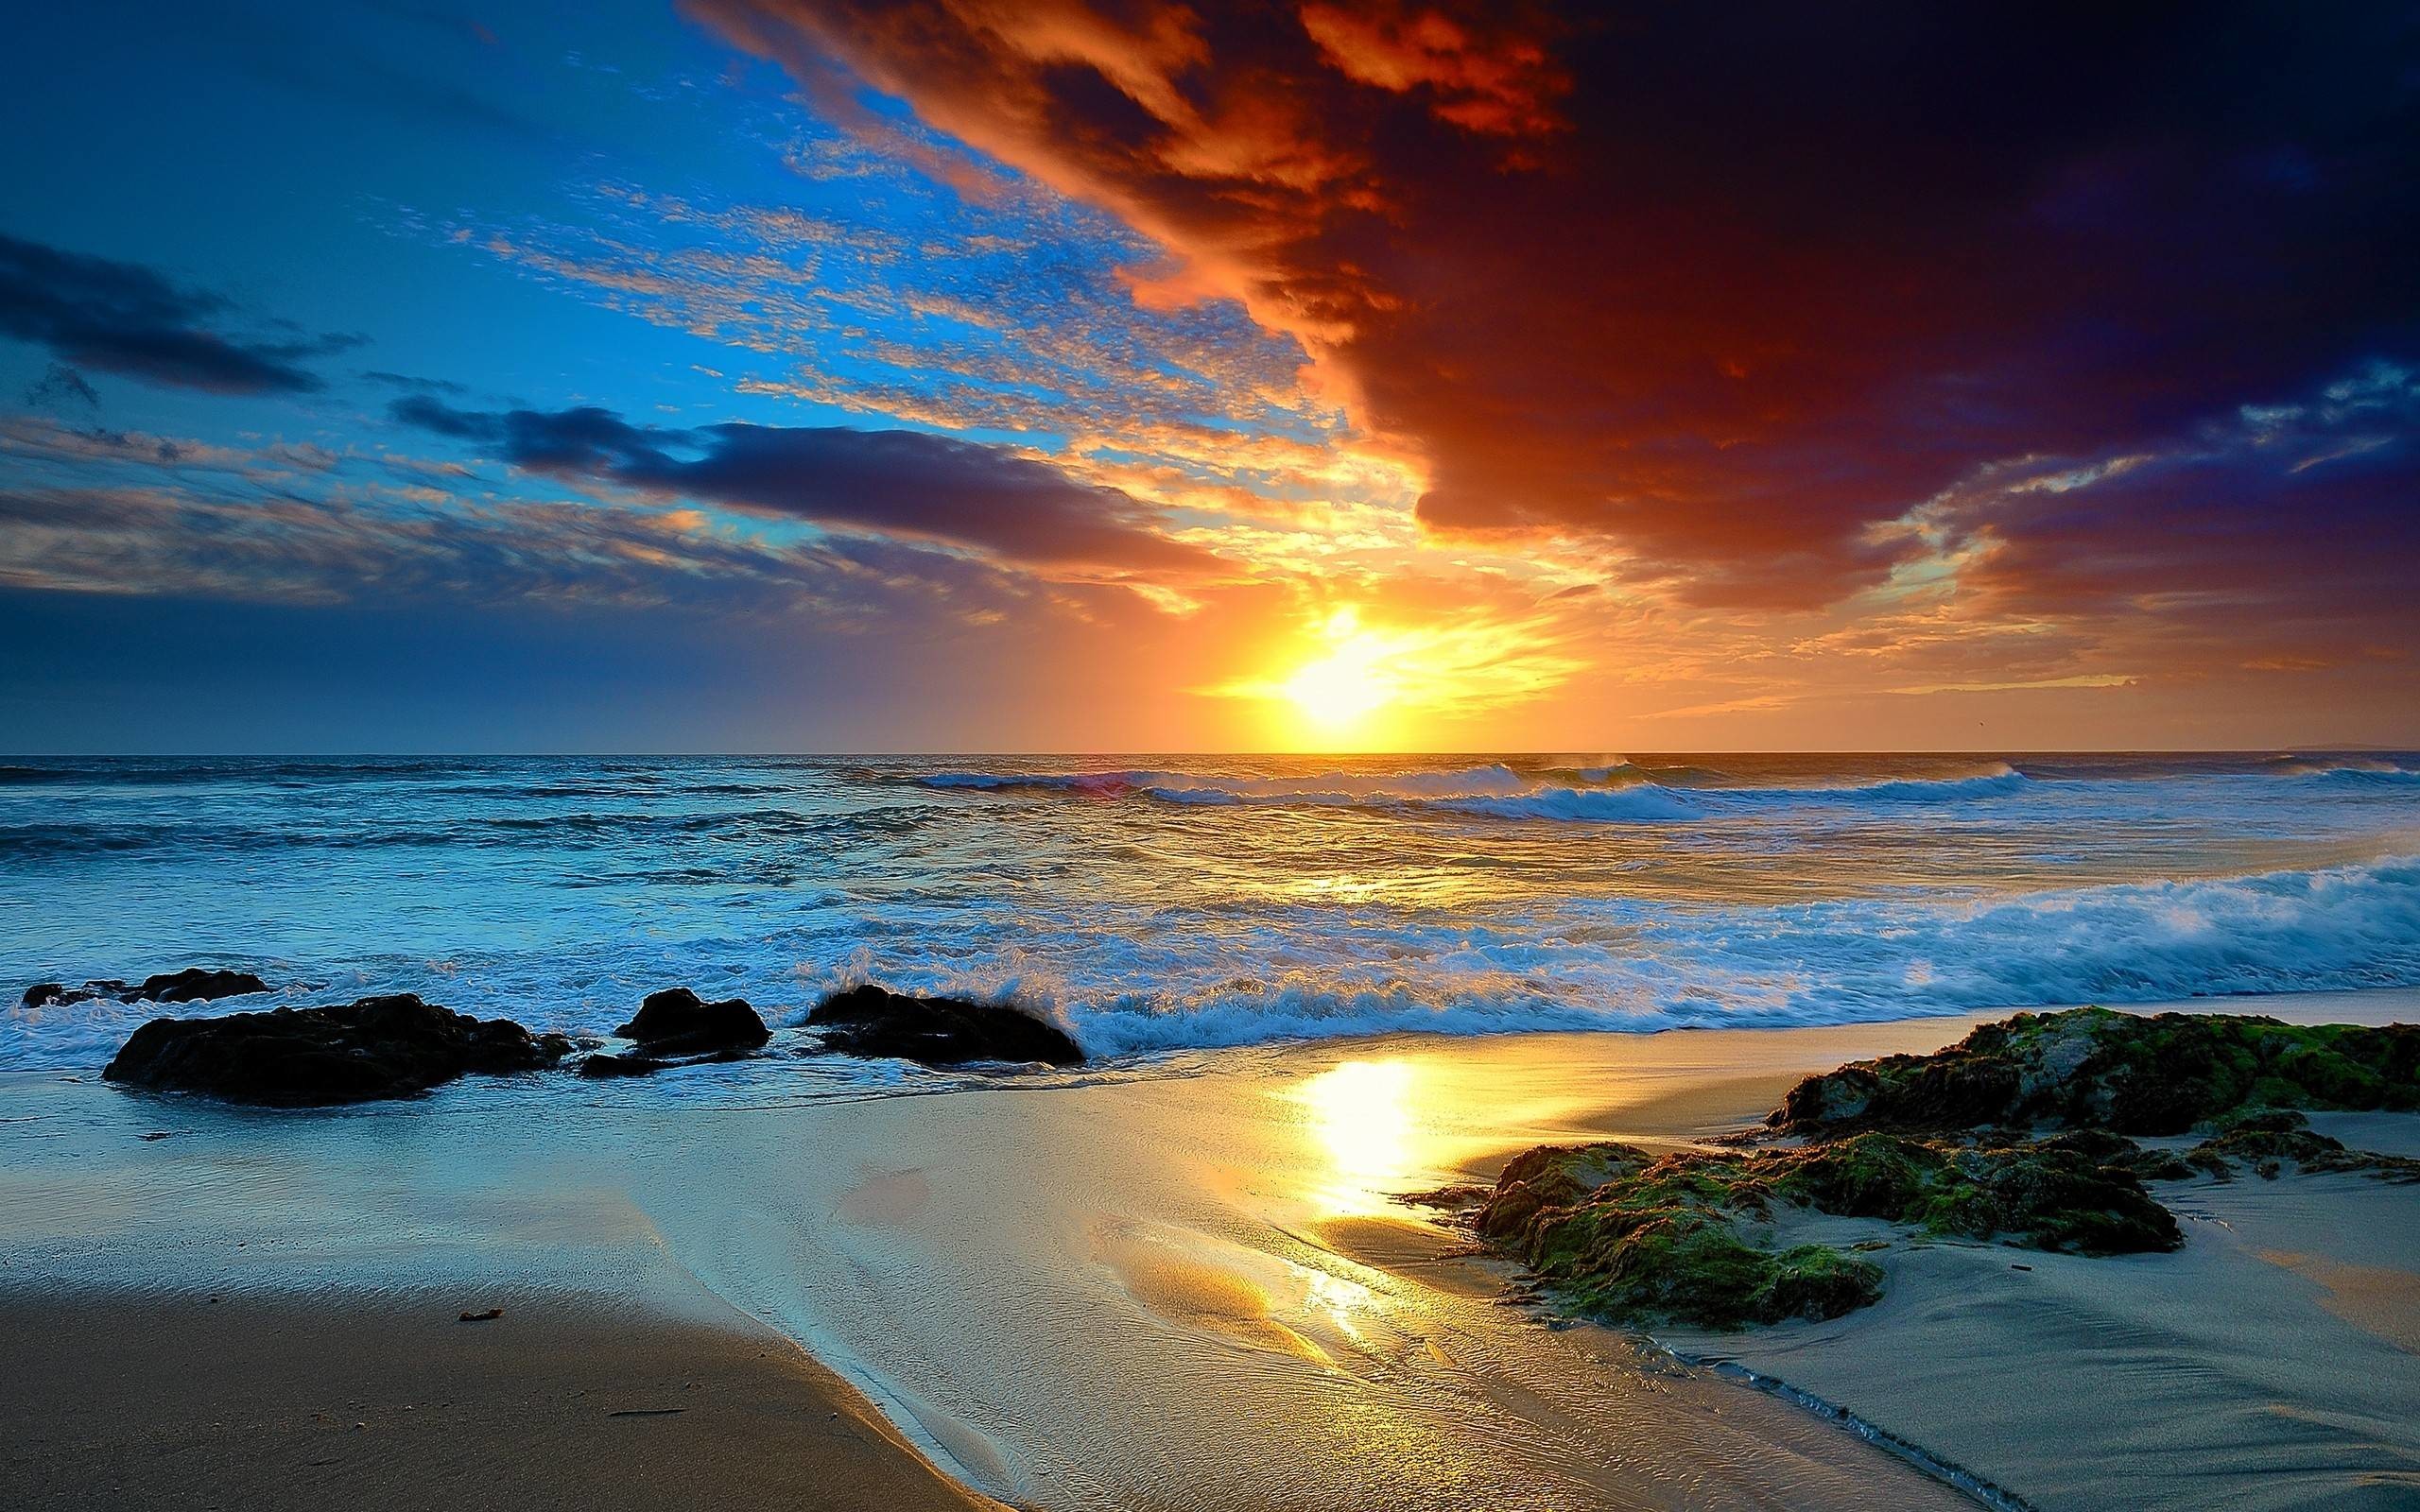 HD wallpaper: Sunrise in Minnamurra-Australia-sea coast with rocks  Ocean-sky with red cloud sunset-Desktop Wallpaper full screen | Wallpaper  Flare